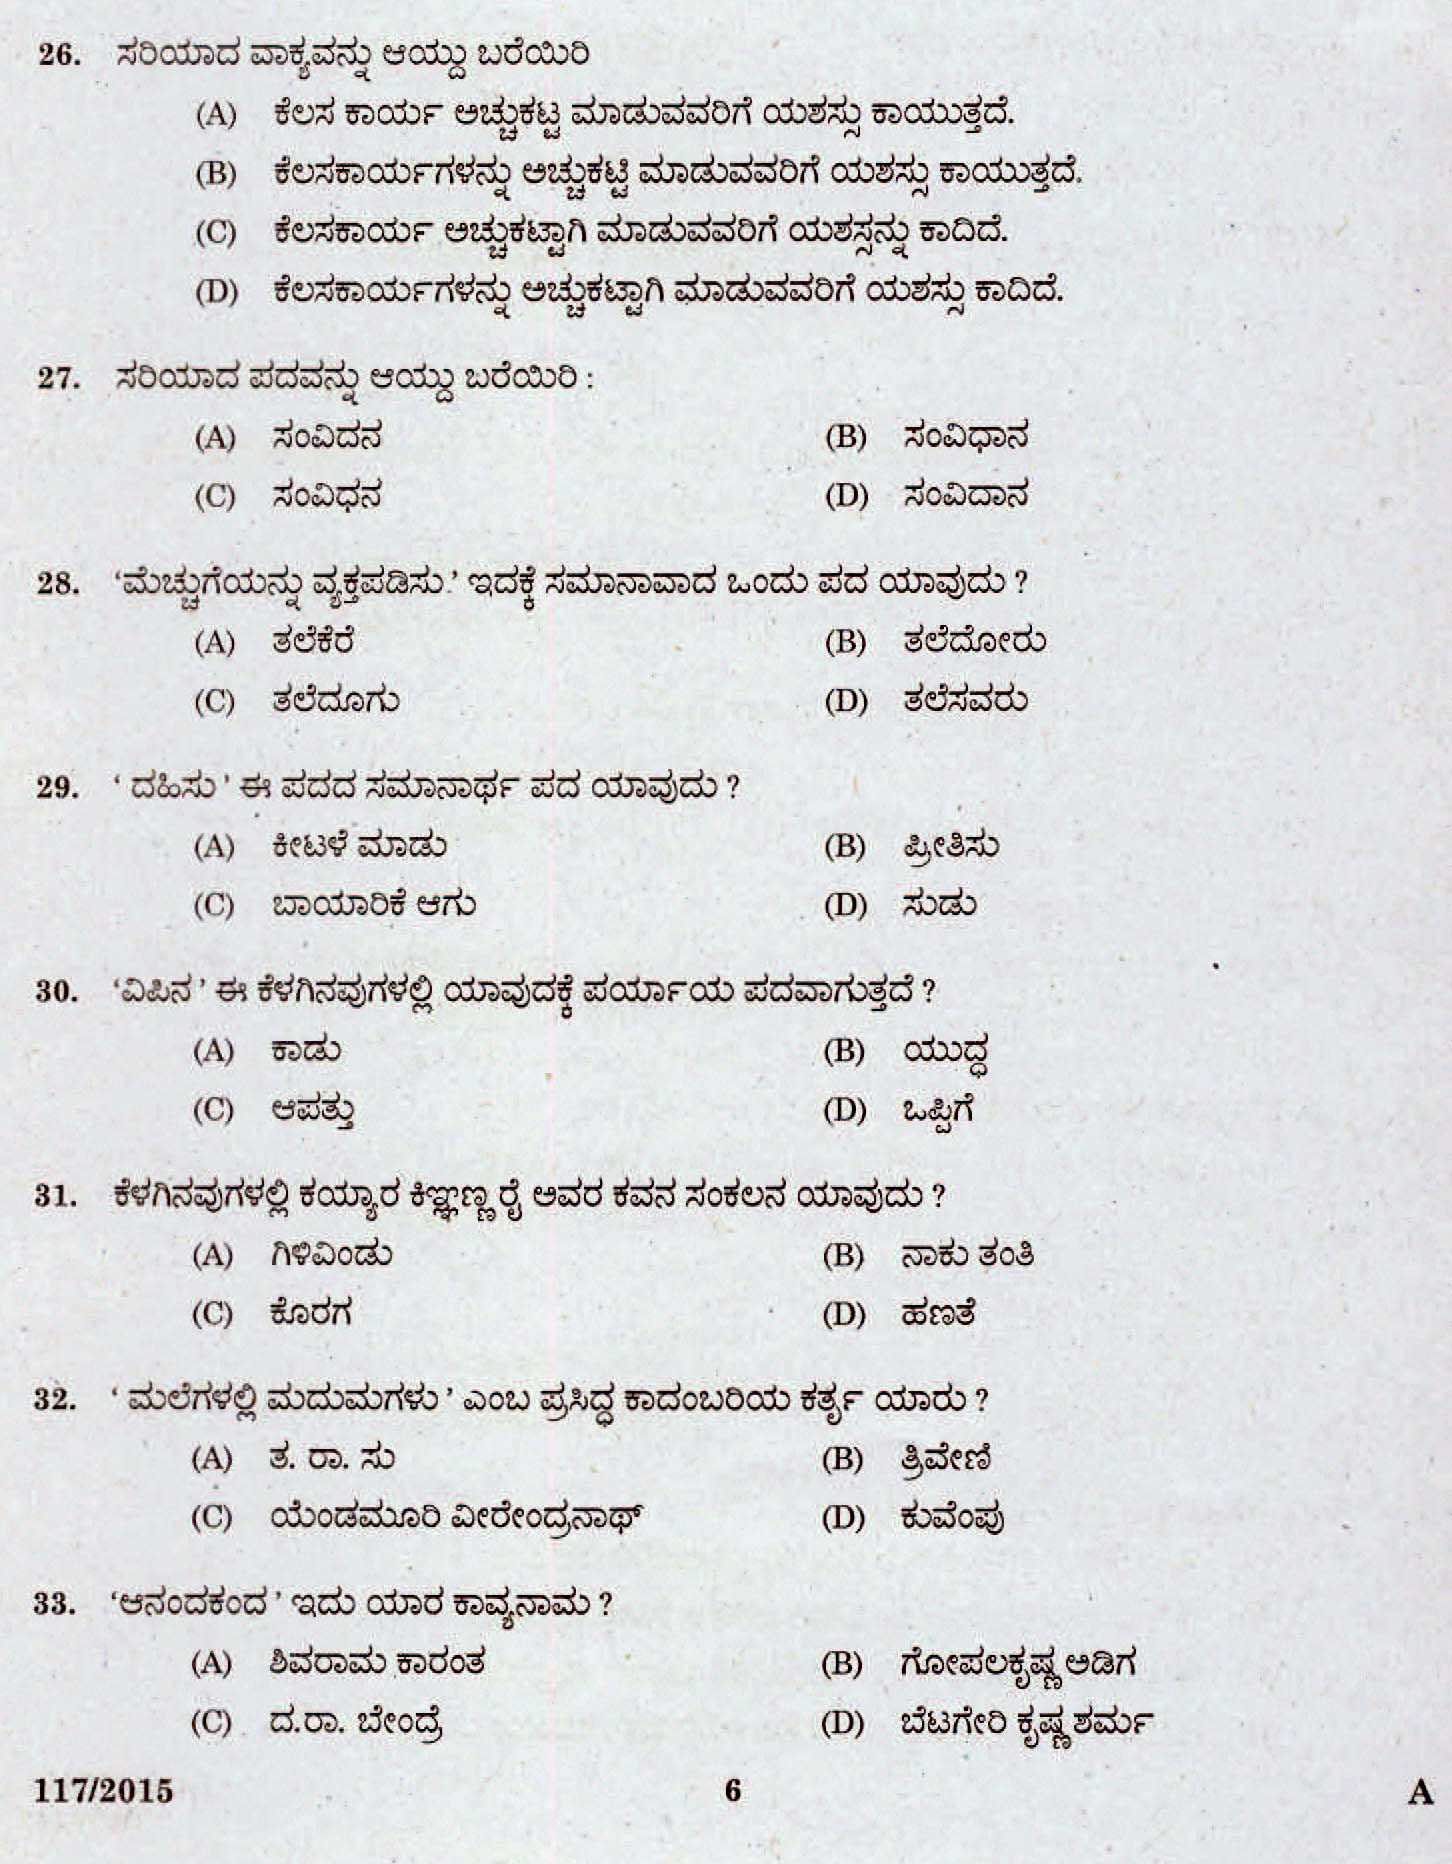 LD Clerk Various Kasaragod Question Paper Malayalam 2015 Paper Code 1172015 4